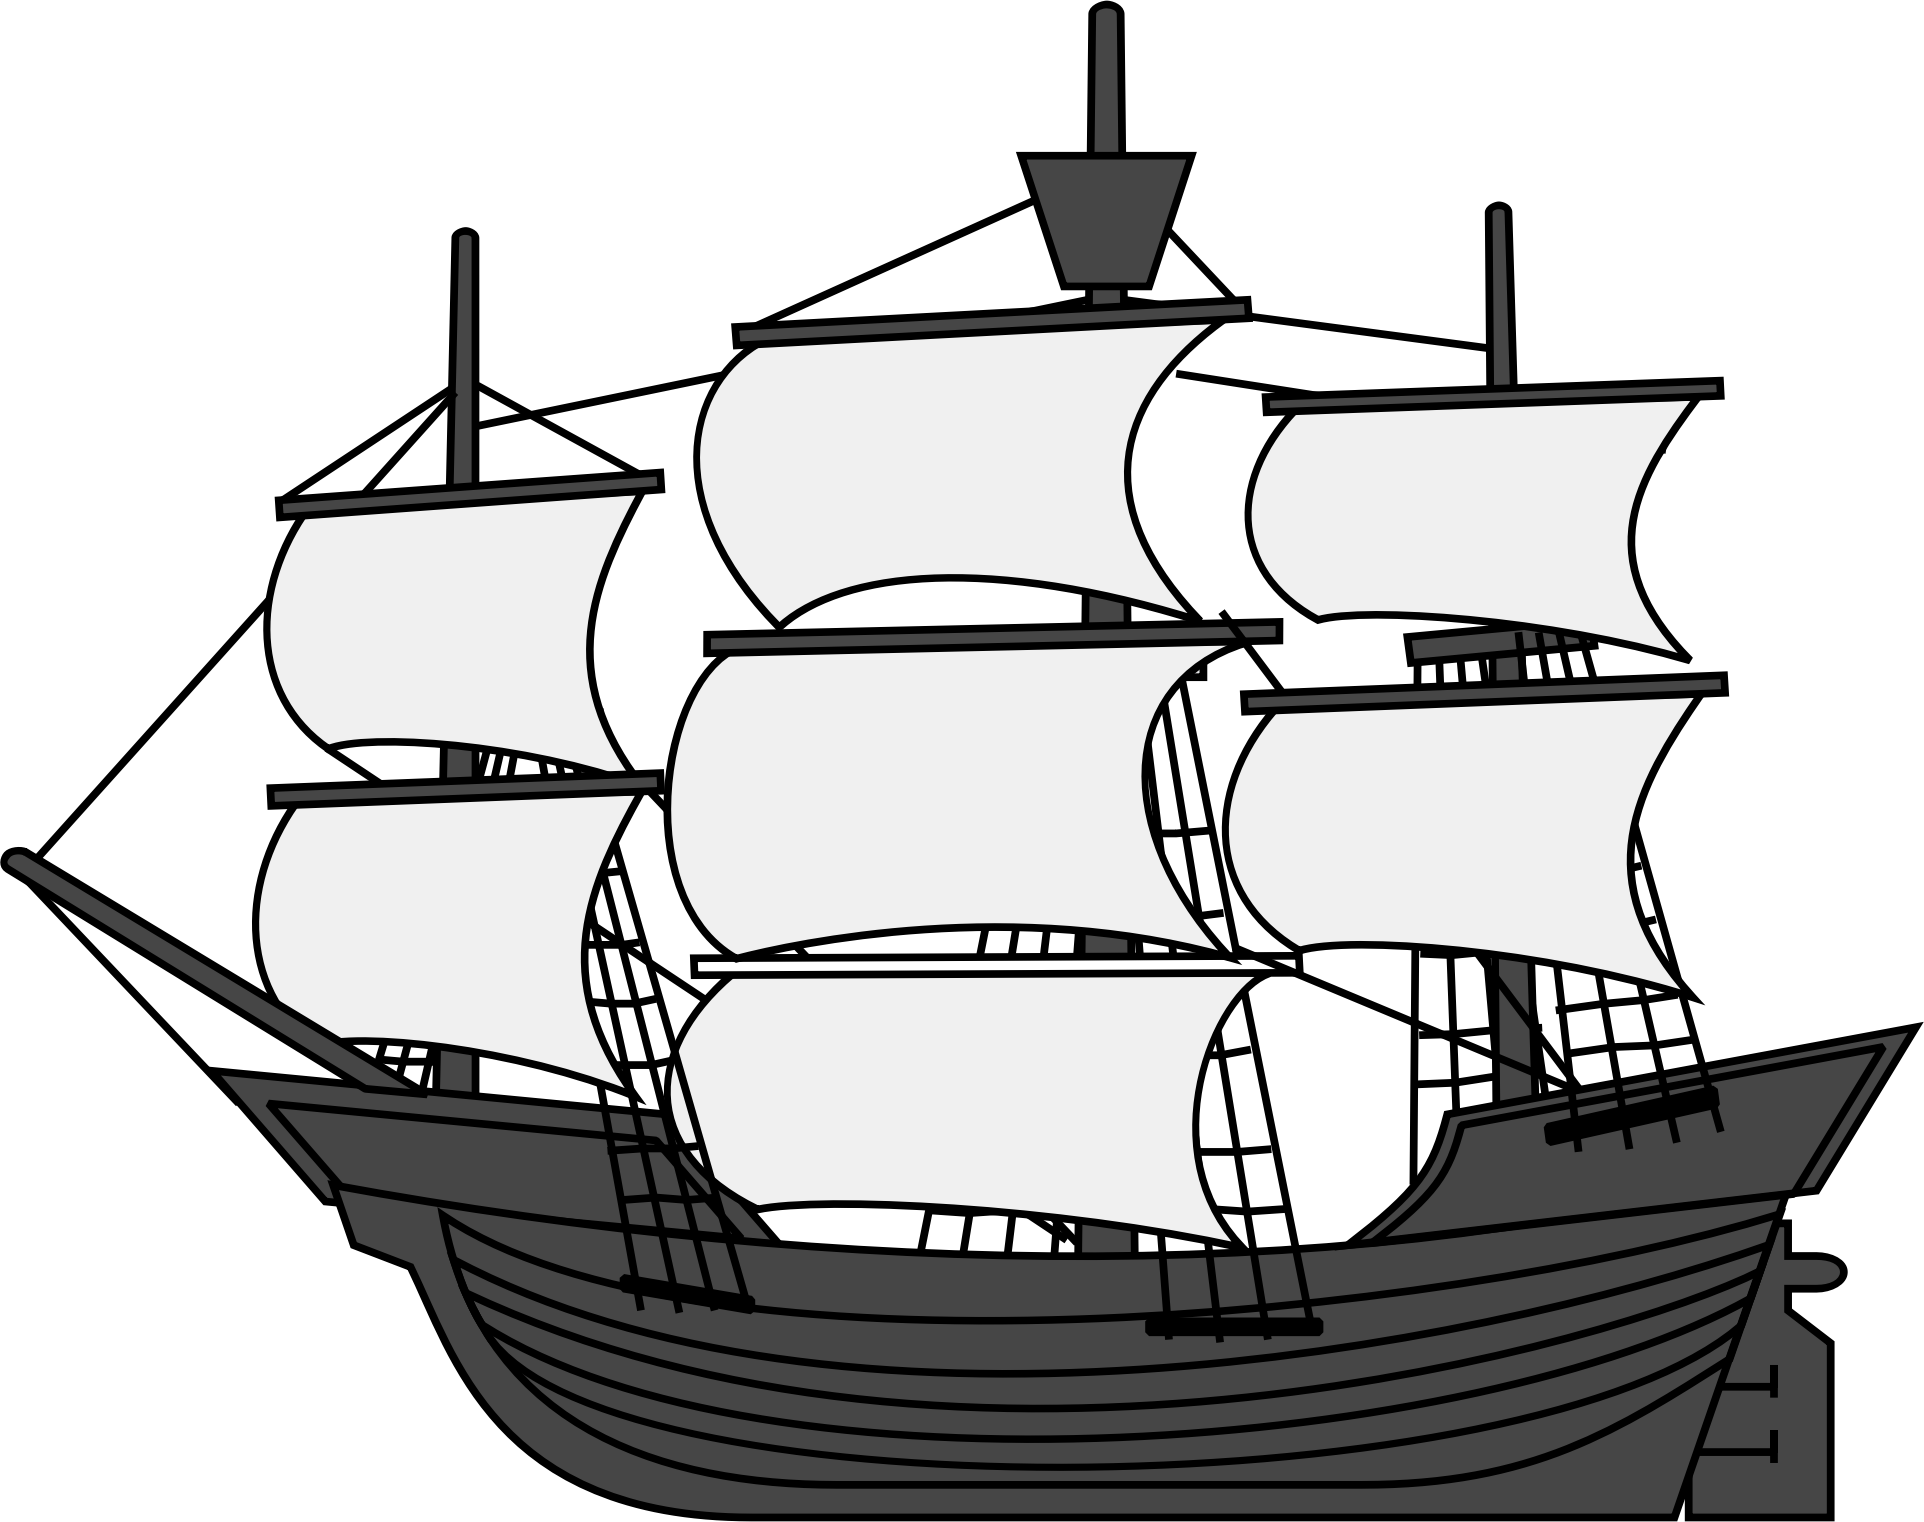 Big Image - Sailing Ship (1924x1522)